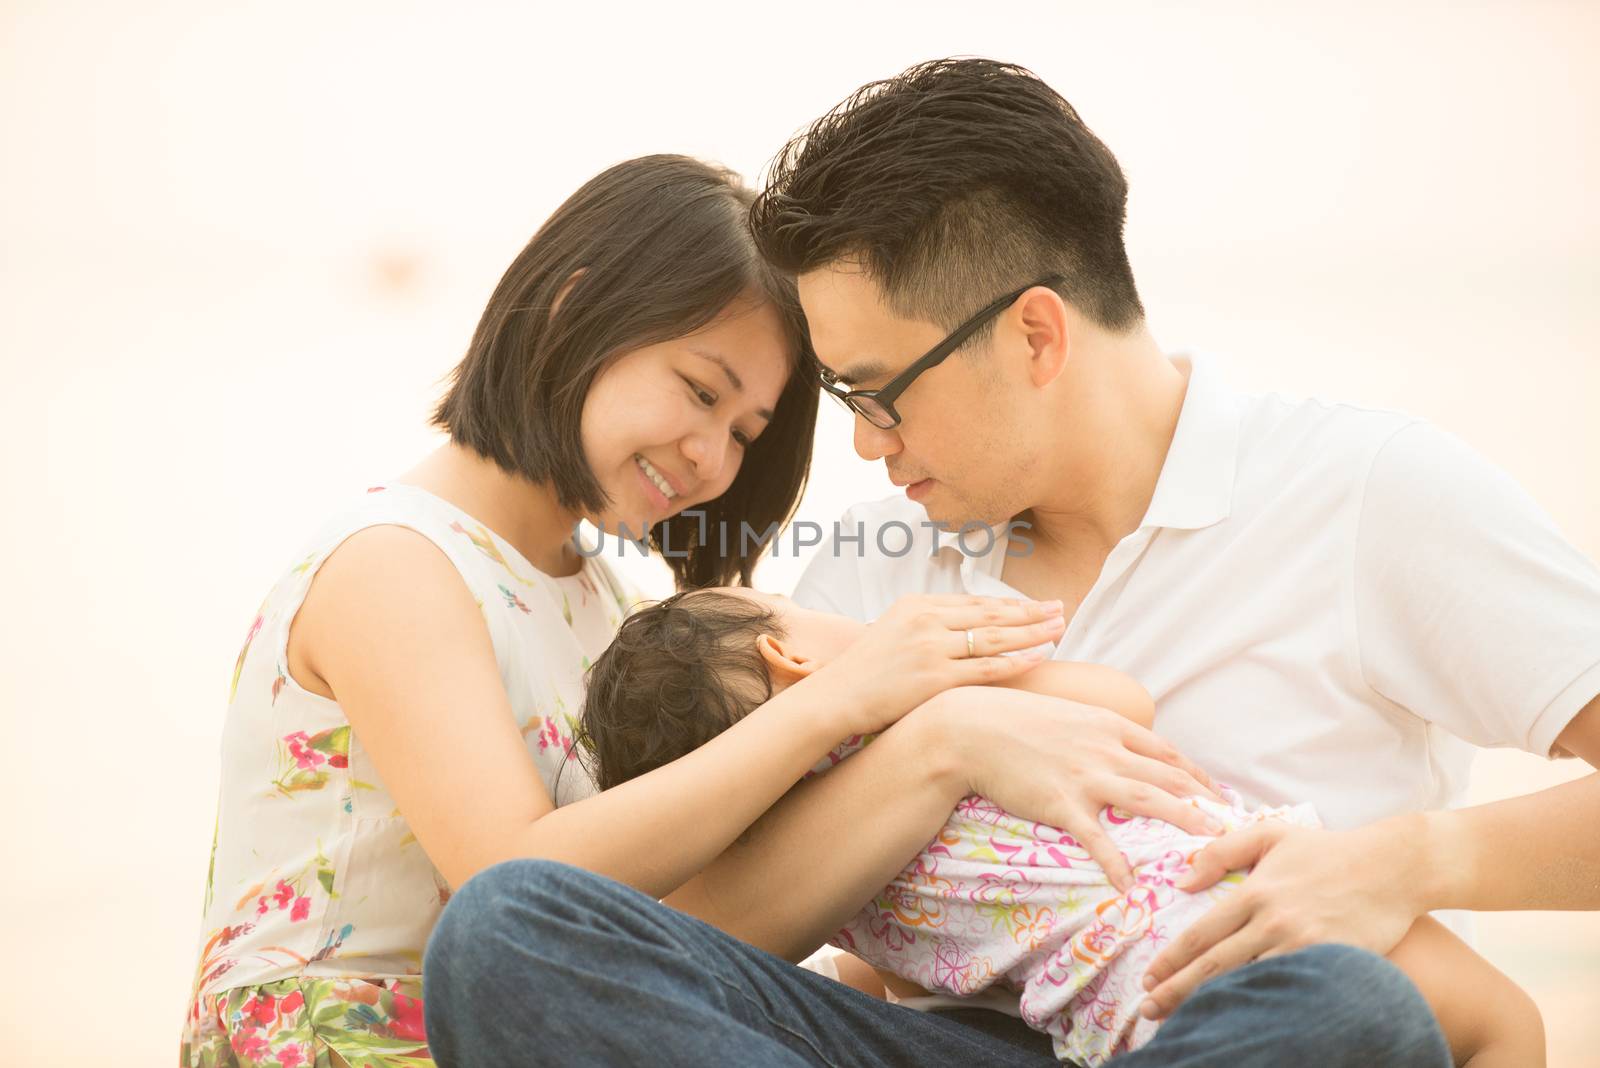 Asian family at outdoor sand beach by szefei